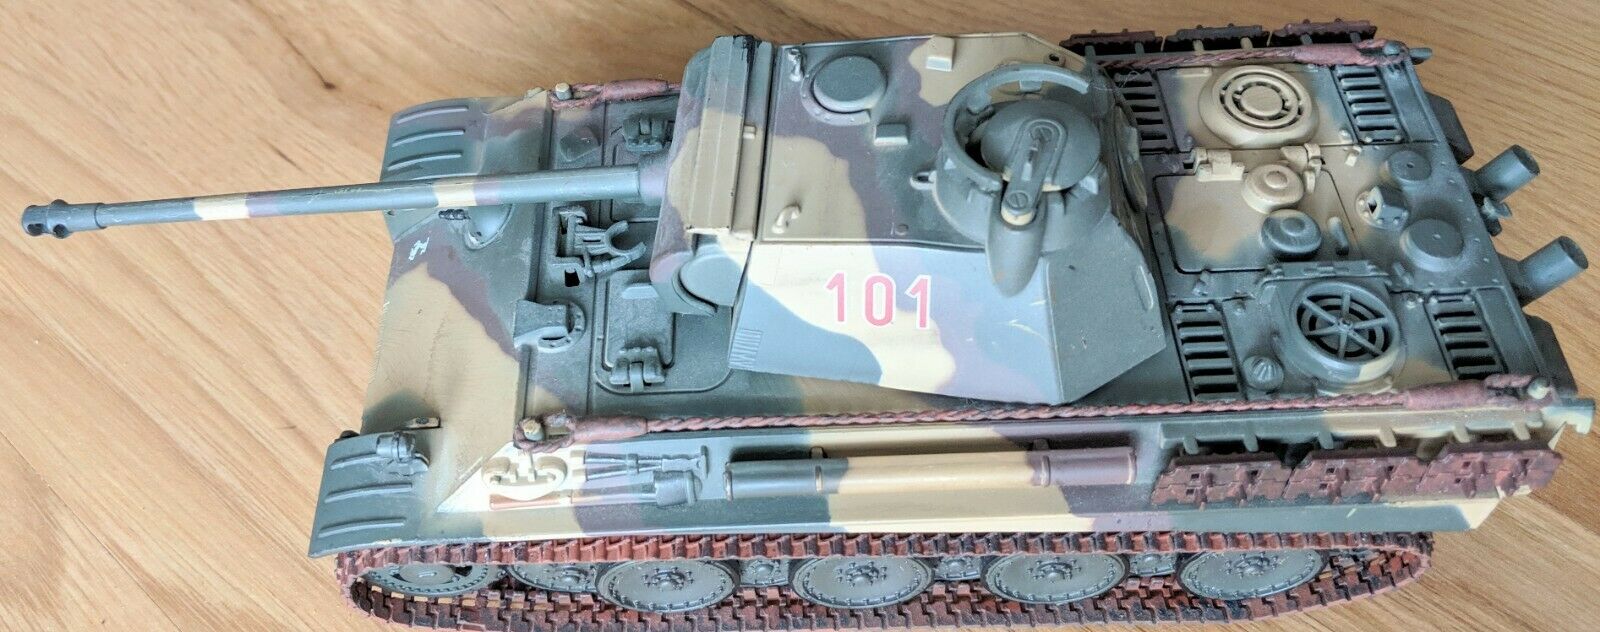 1:32 21st Century Toys Ultimate Soldier WWII German Panther Medium Panzer Tank